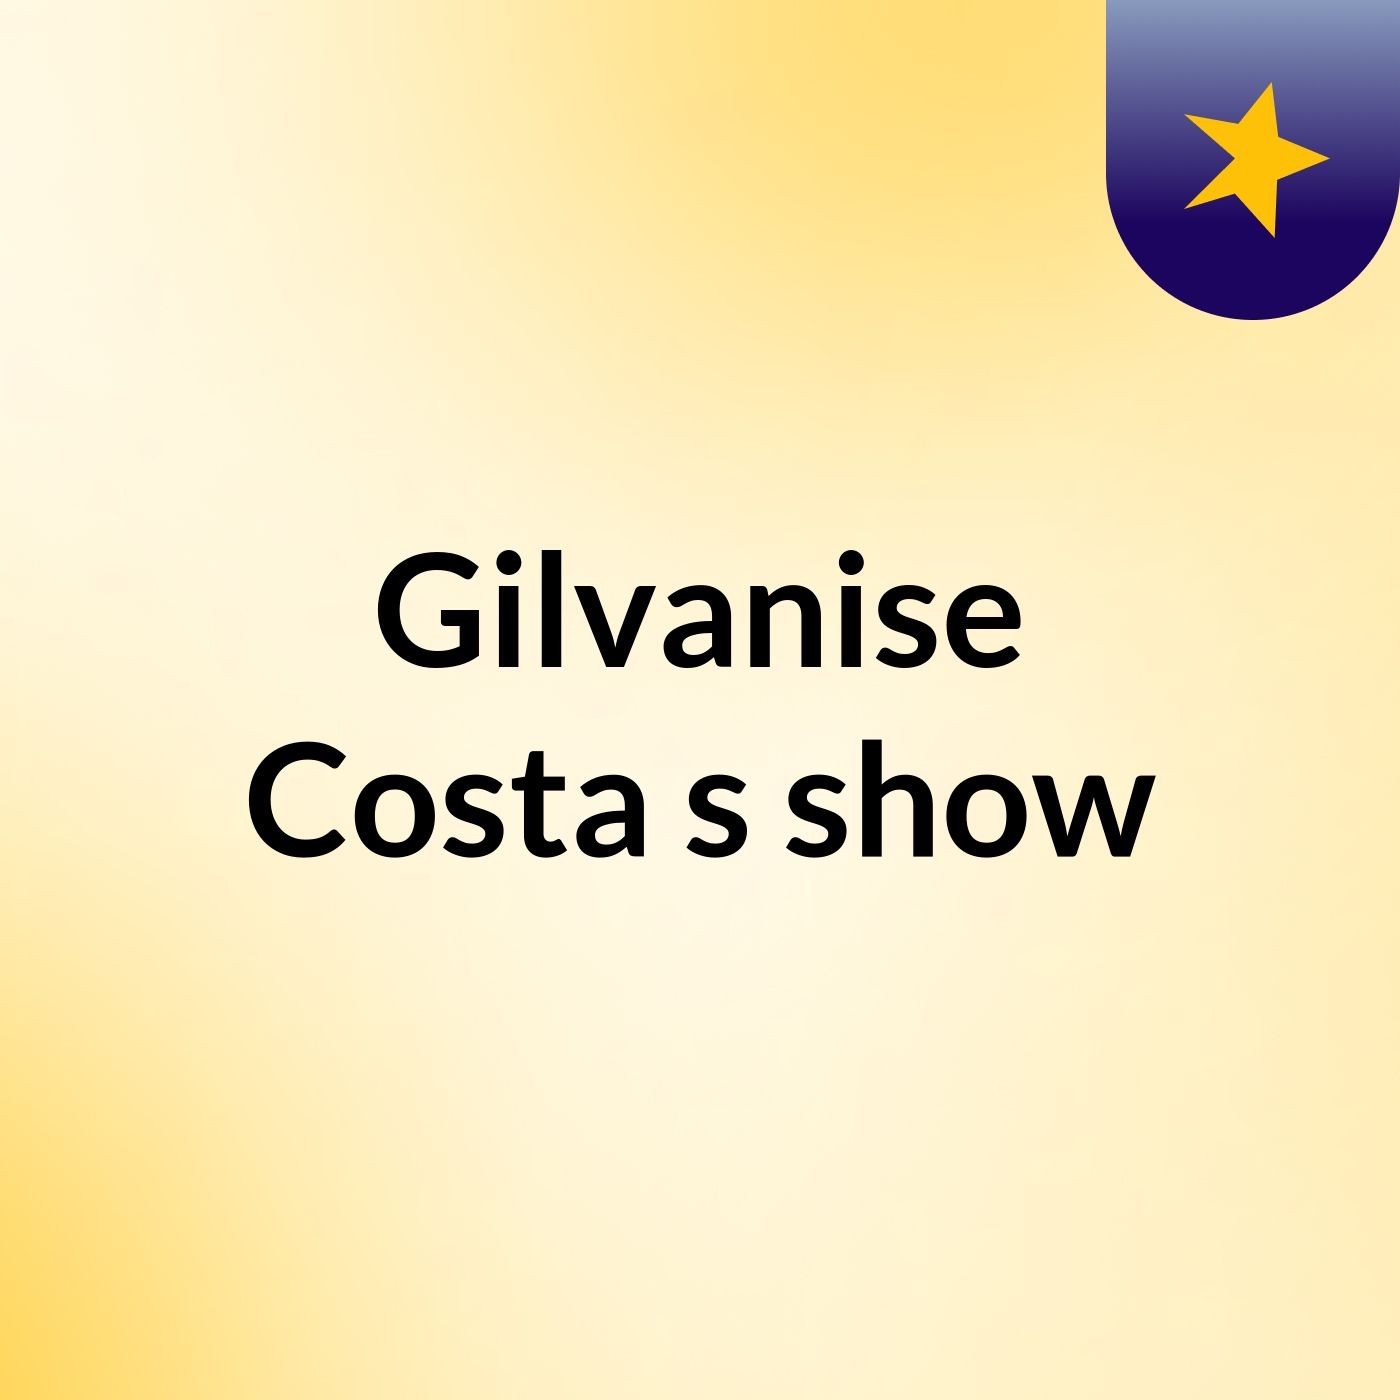 Gilvanise Costa's show